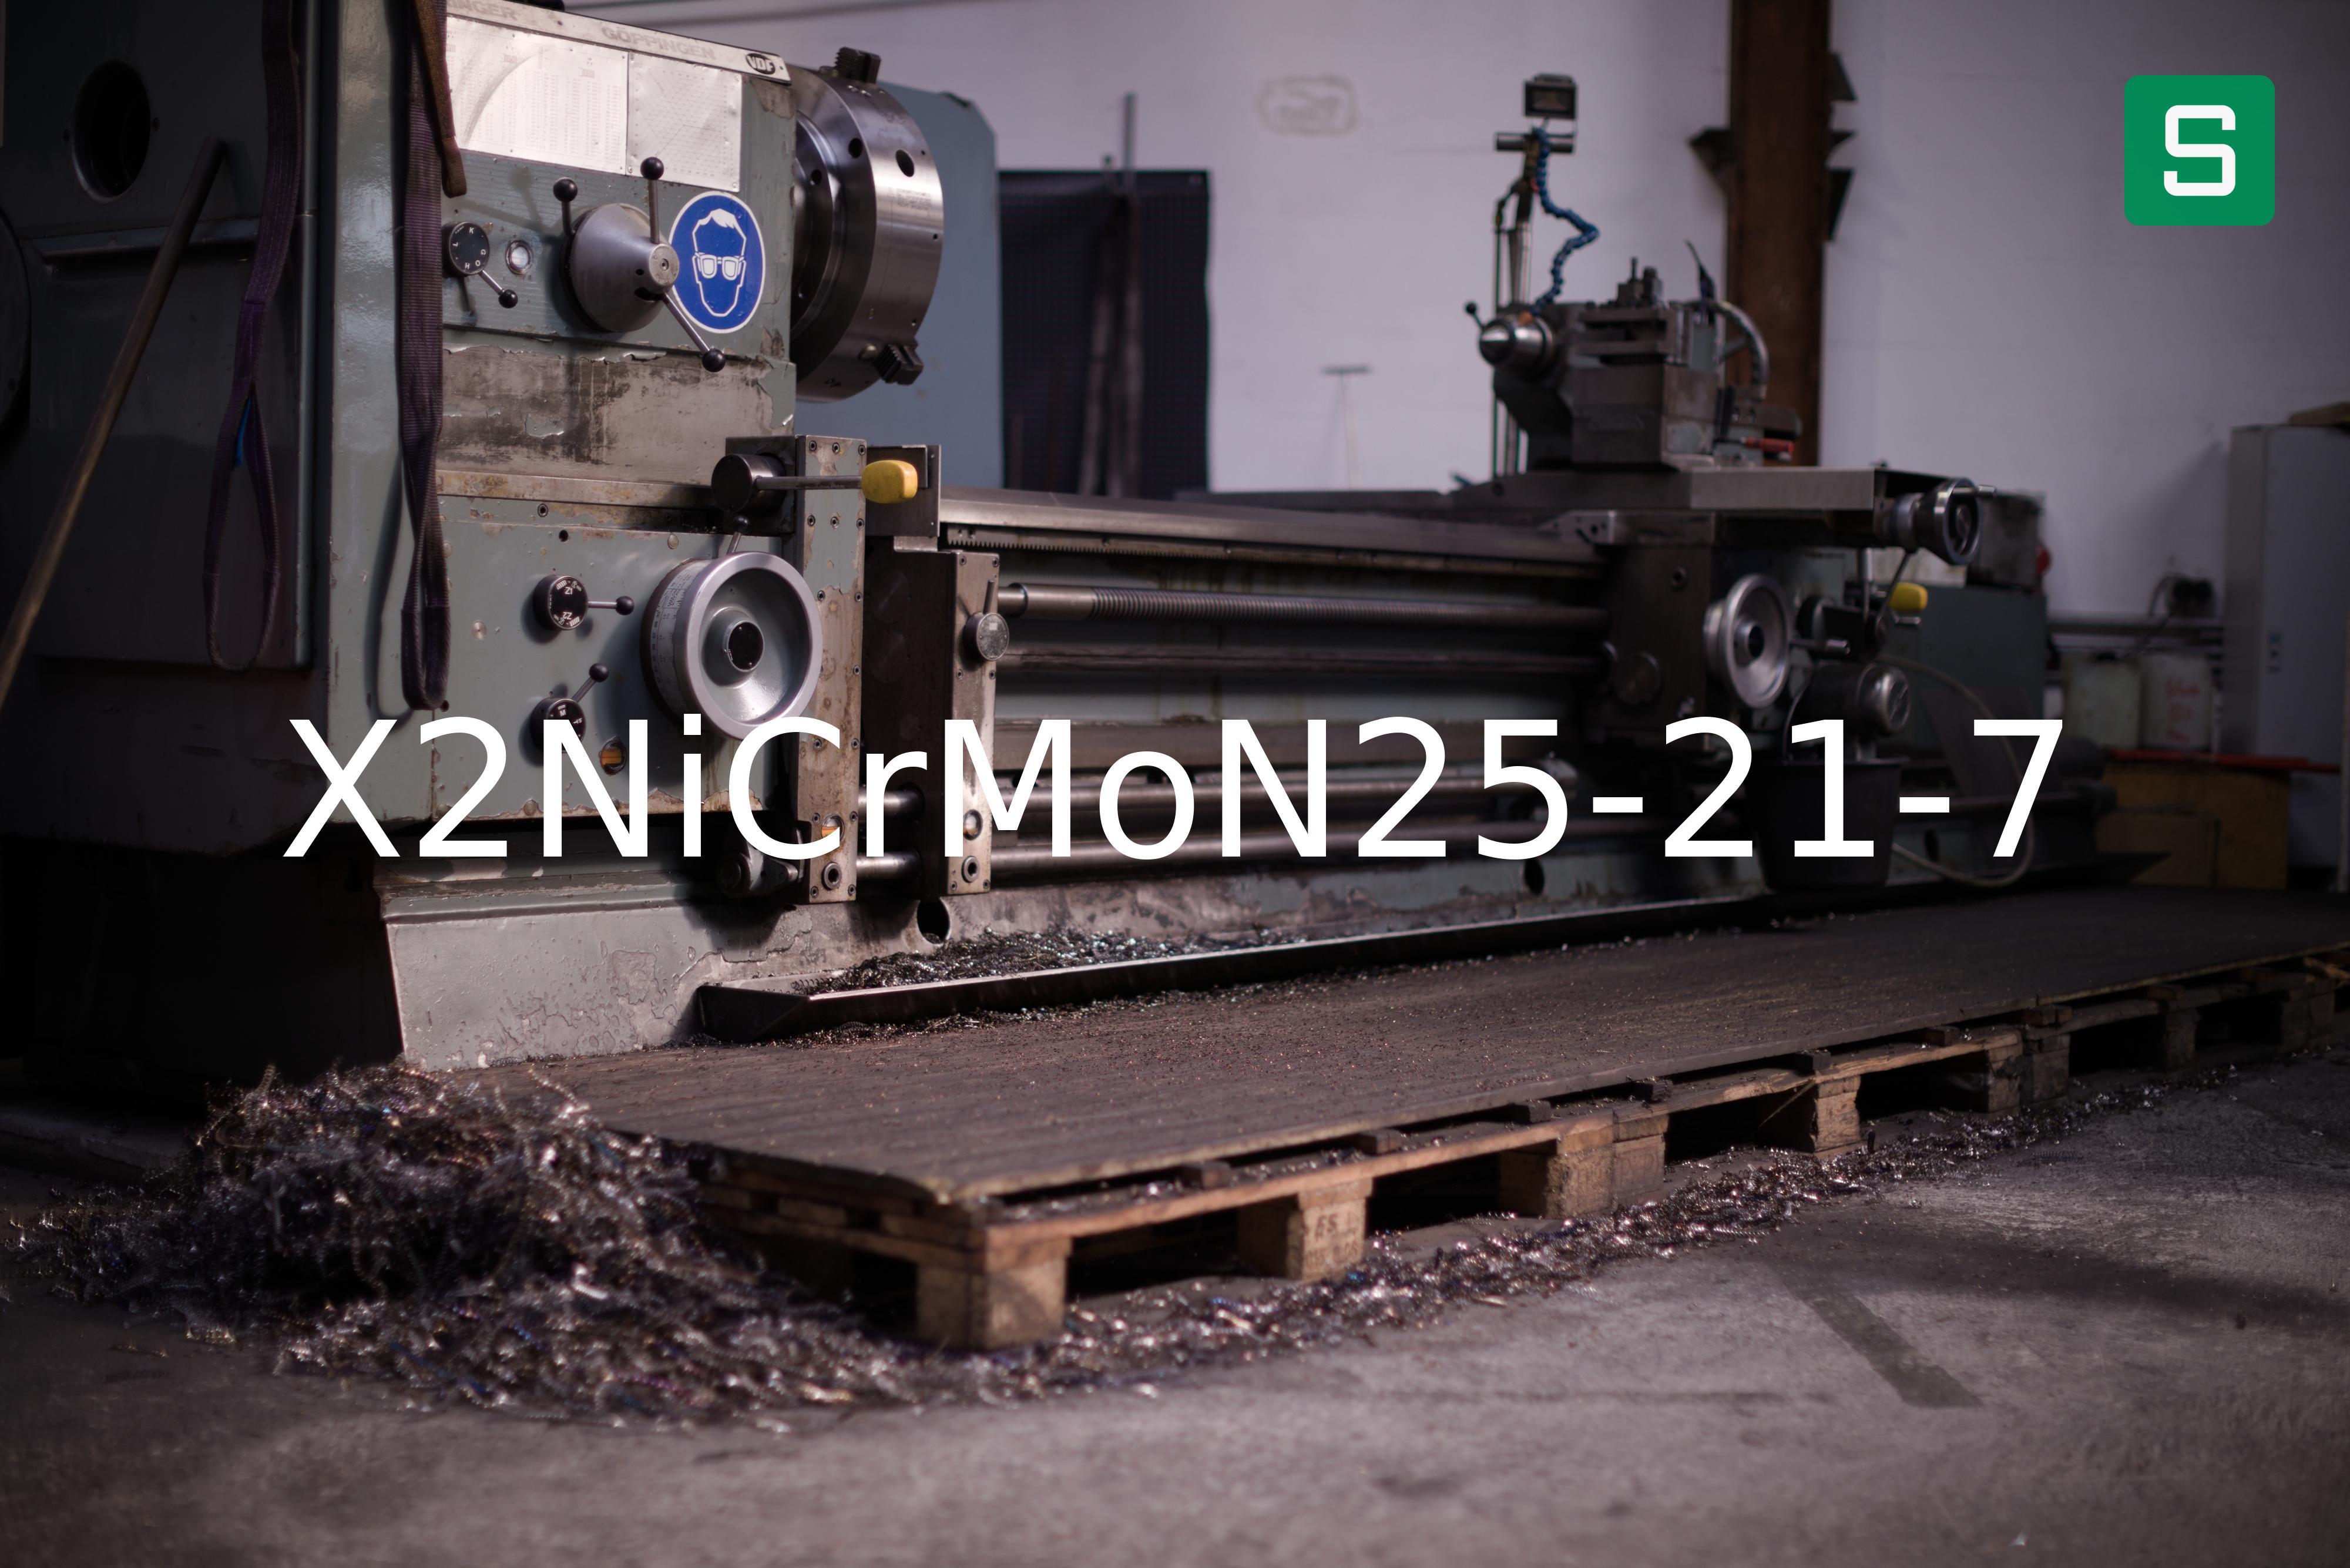 Steel Material: X2NiCrMoN25-21-7